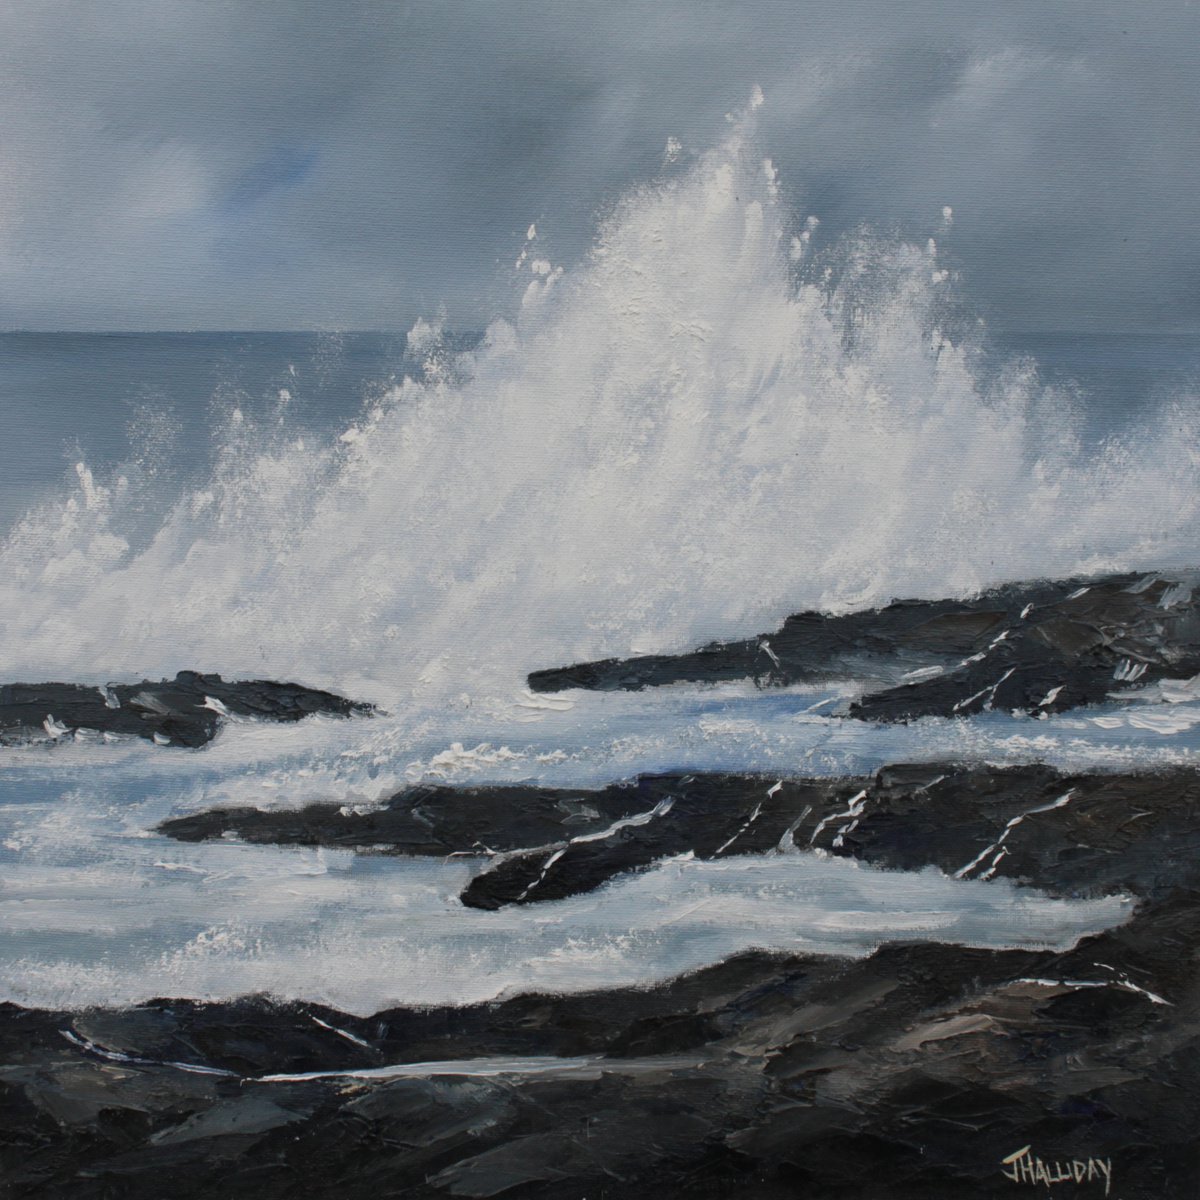 A Bigger Wave, Irish Landscape by John Halliday